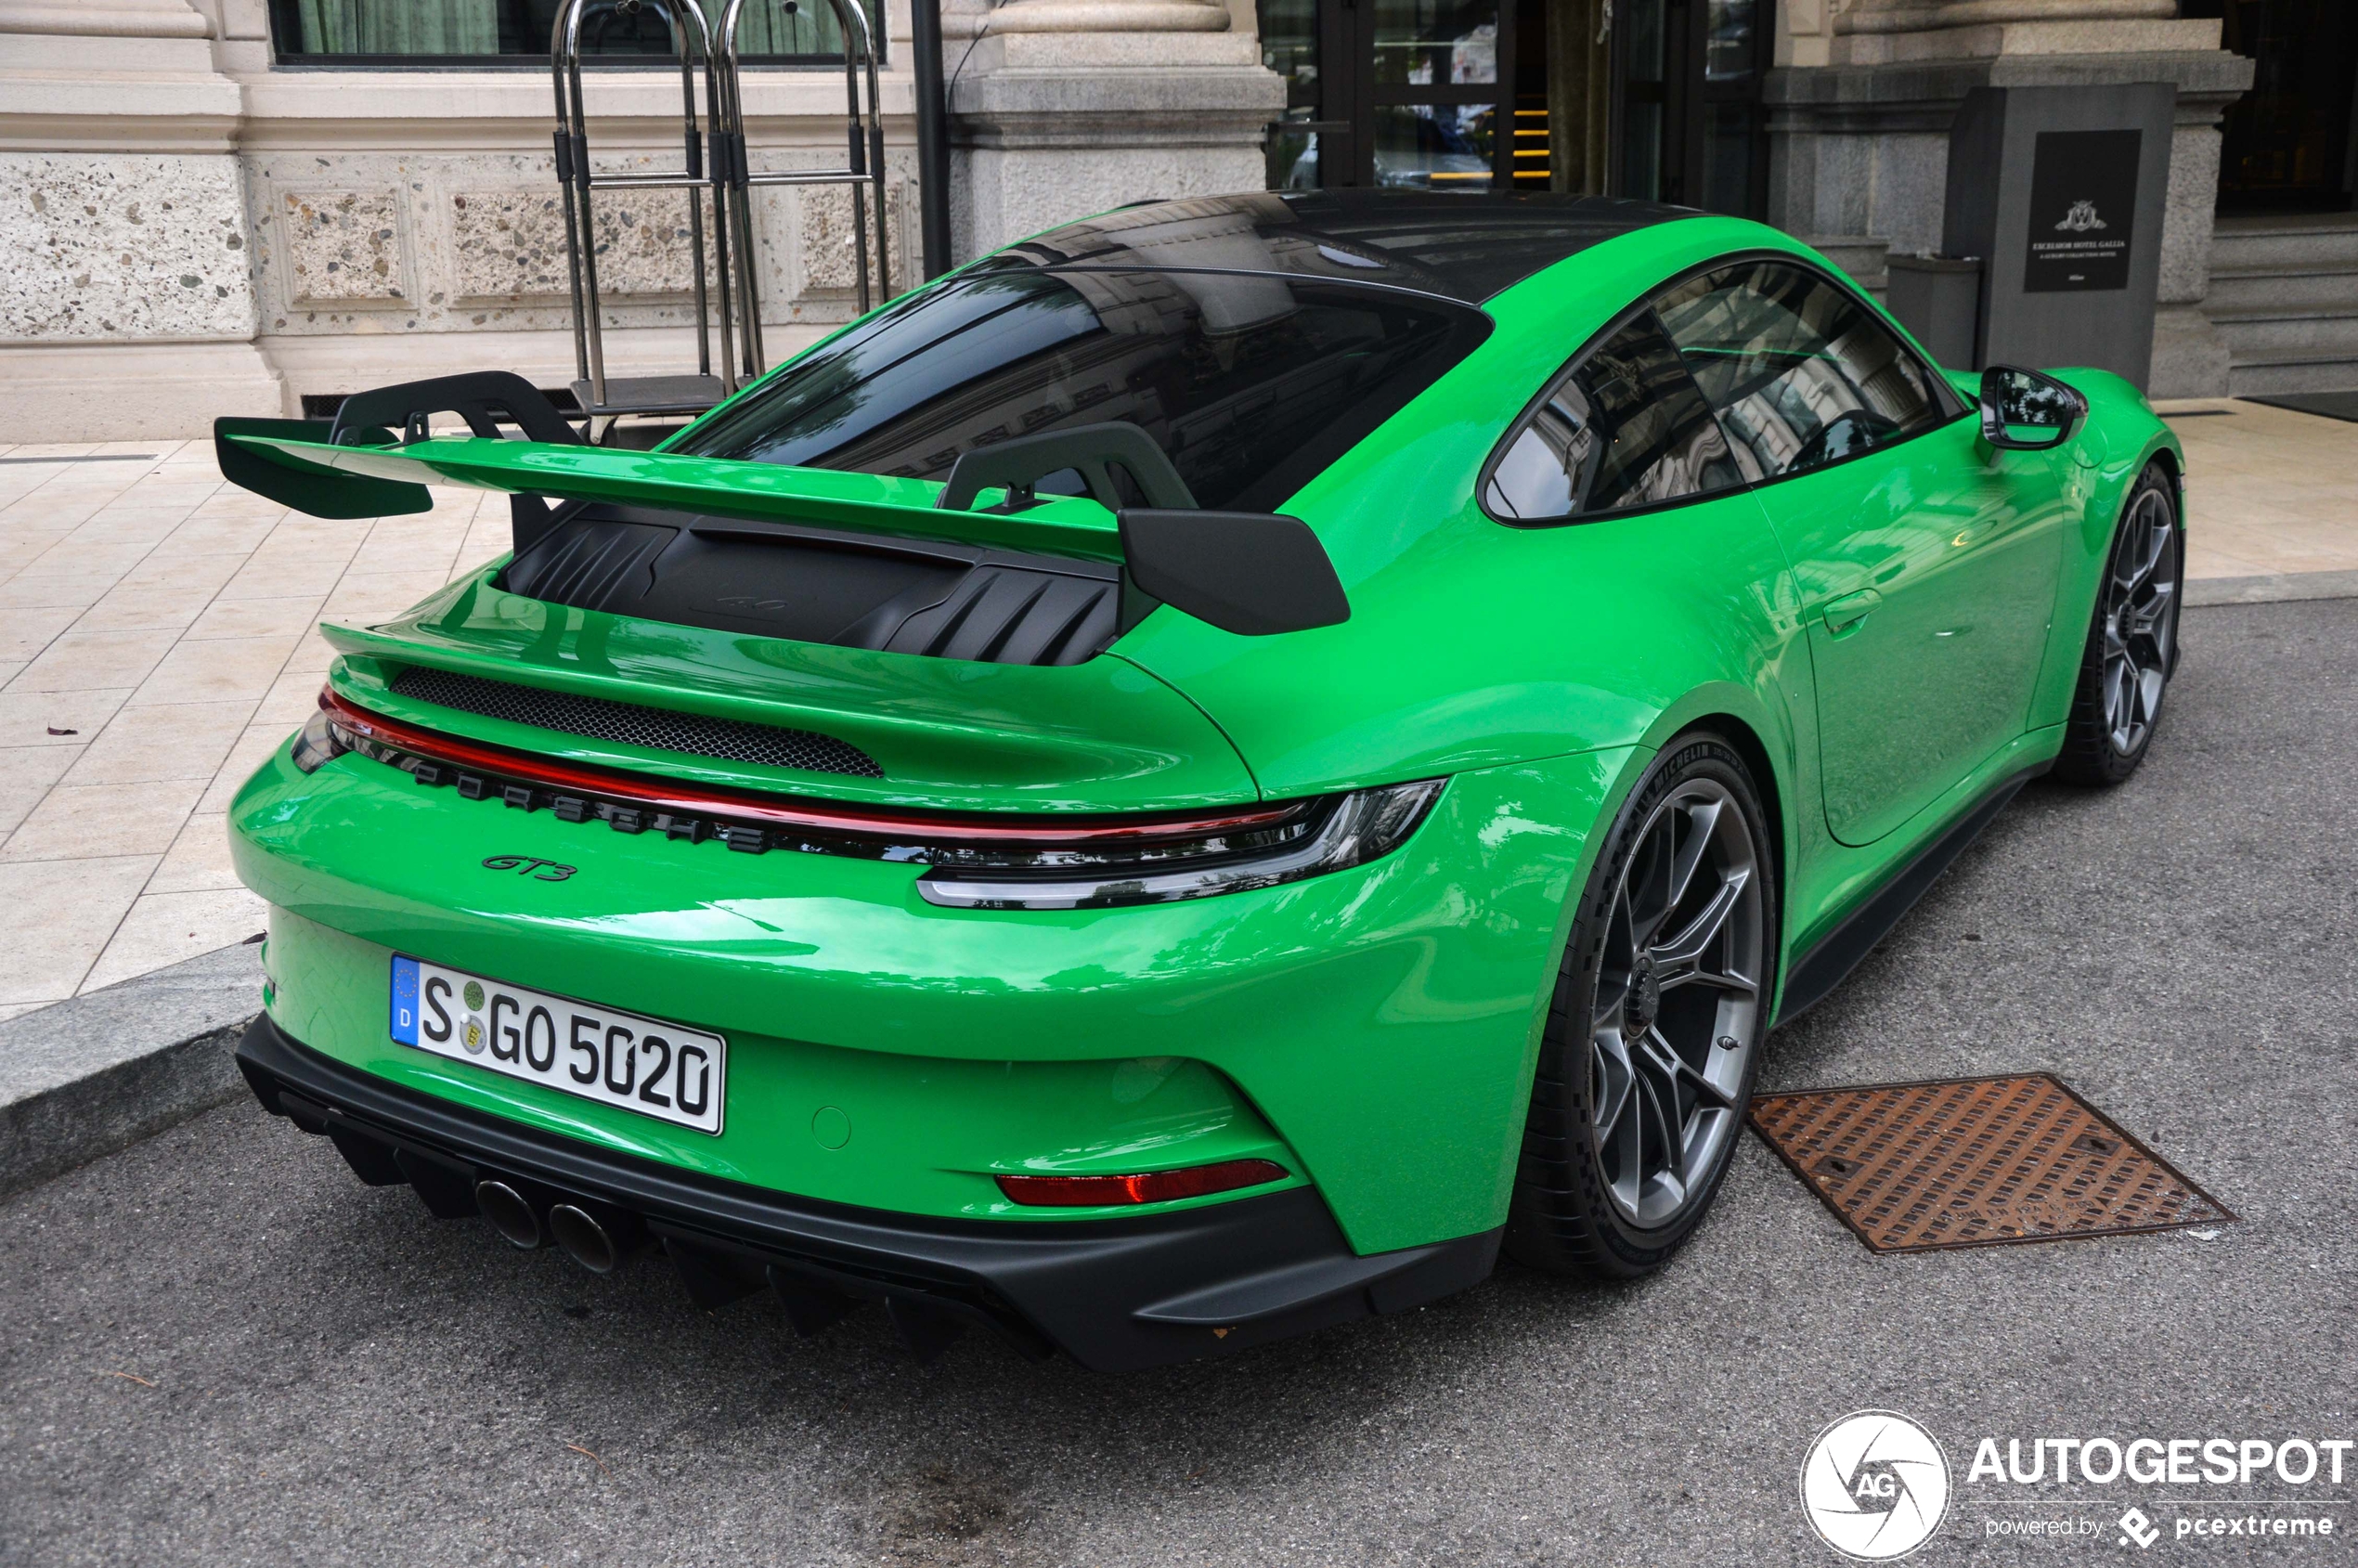 We've never seen the Porsche 992 GT3 in Python green before